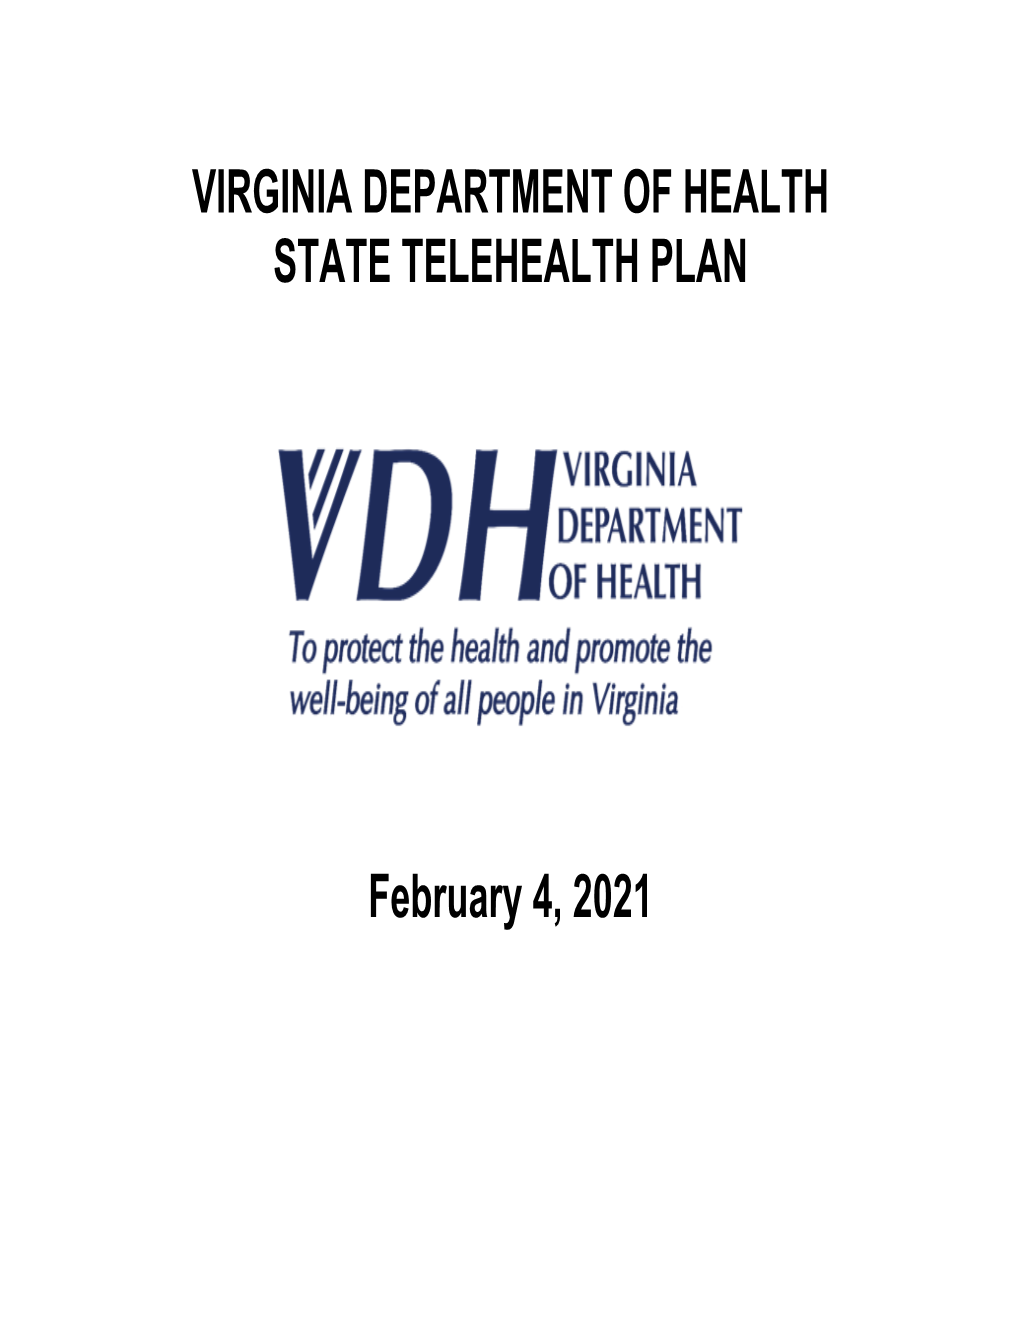 Virginia Department of Health State Telehealth Plan